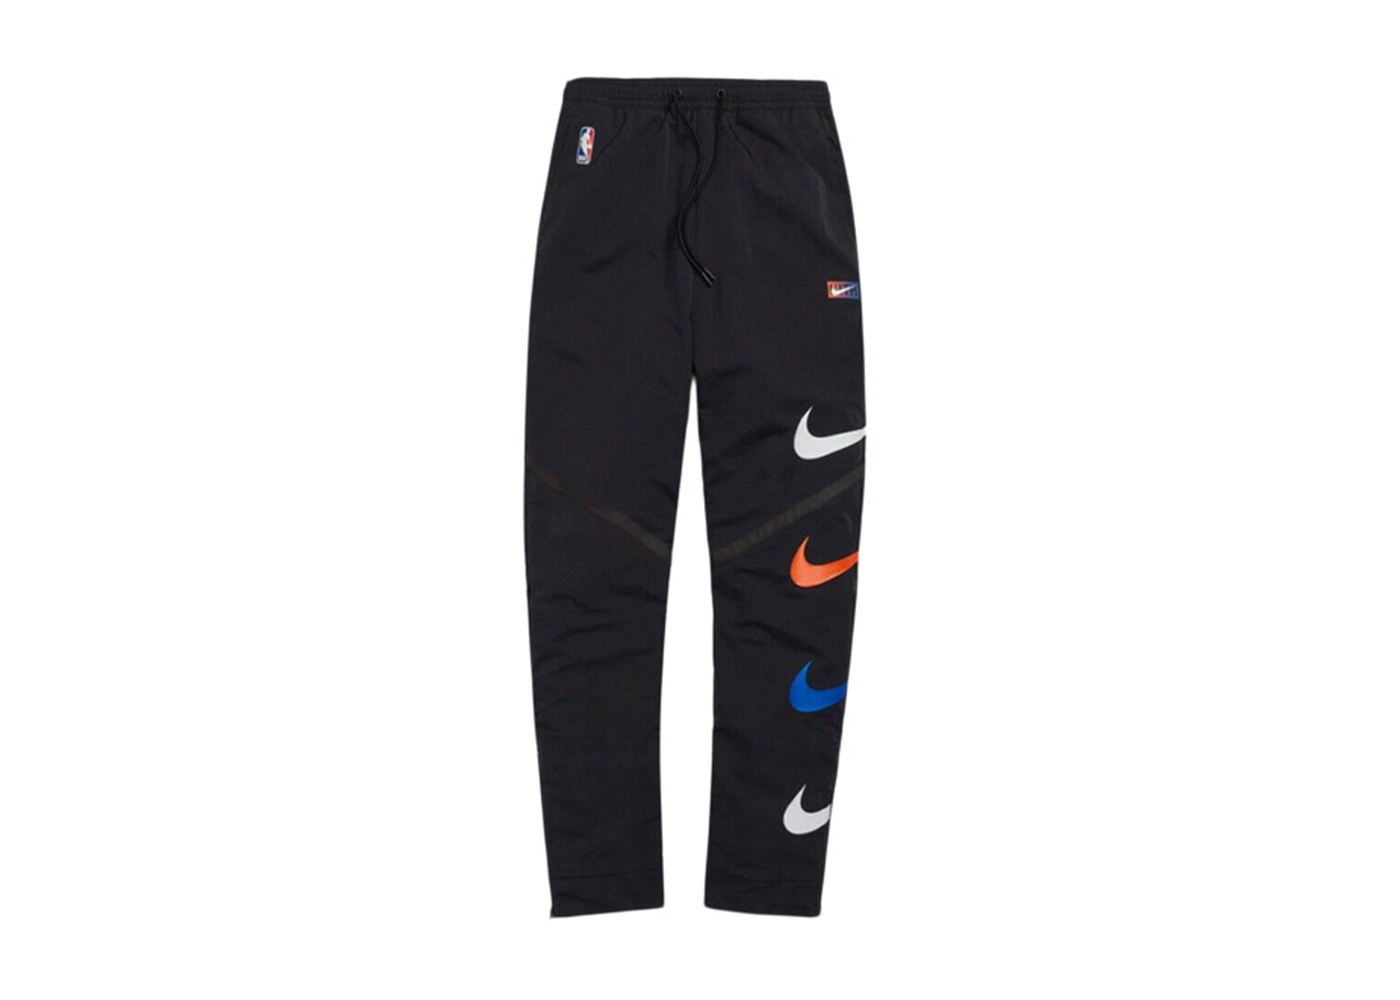 Kith Nike for New York Knicks Pants Black/Multi